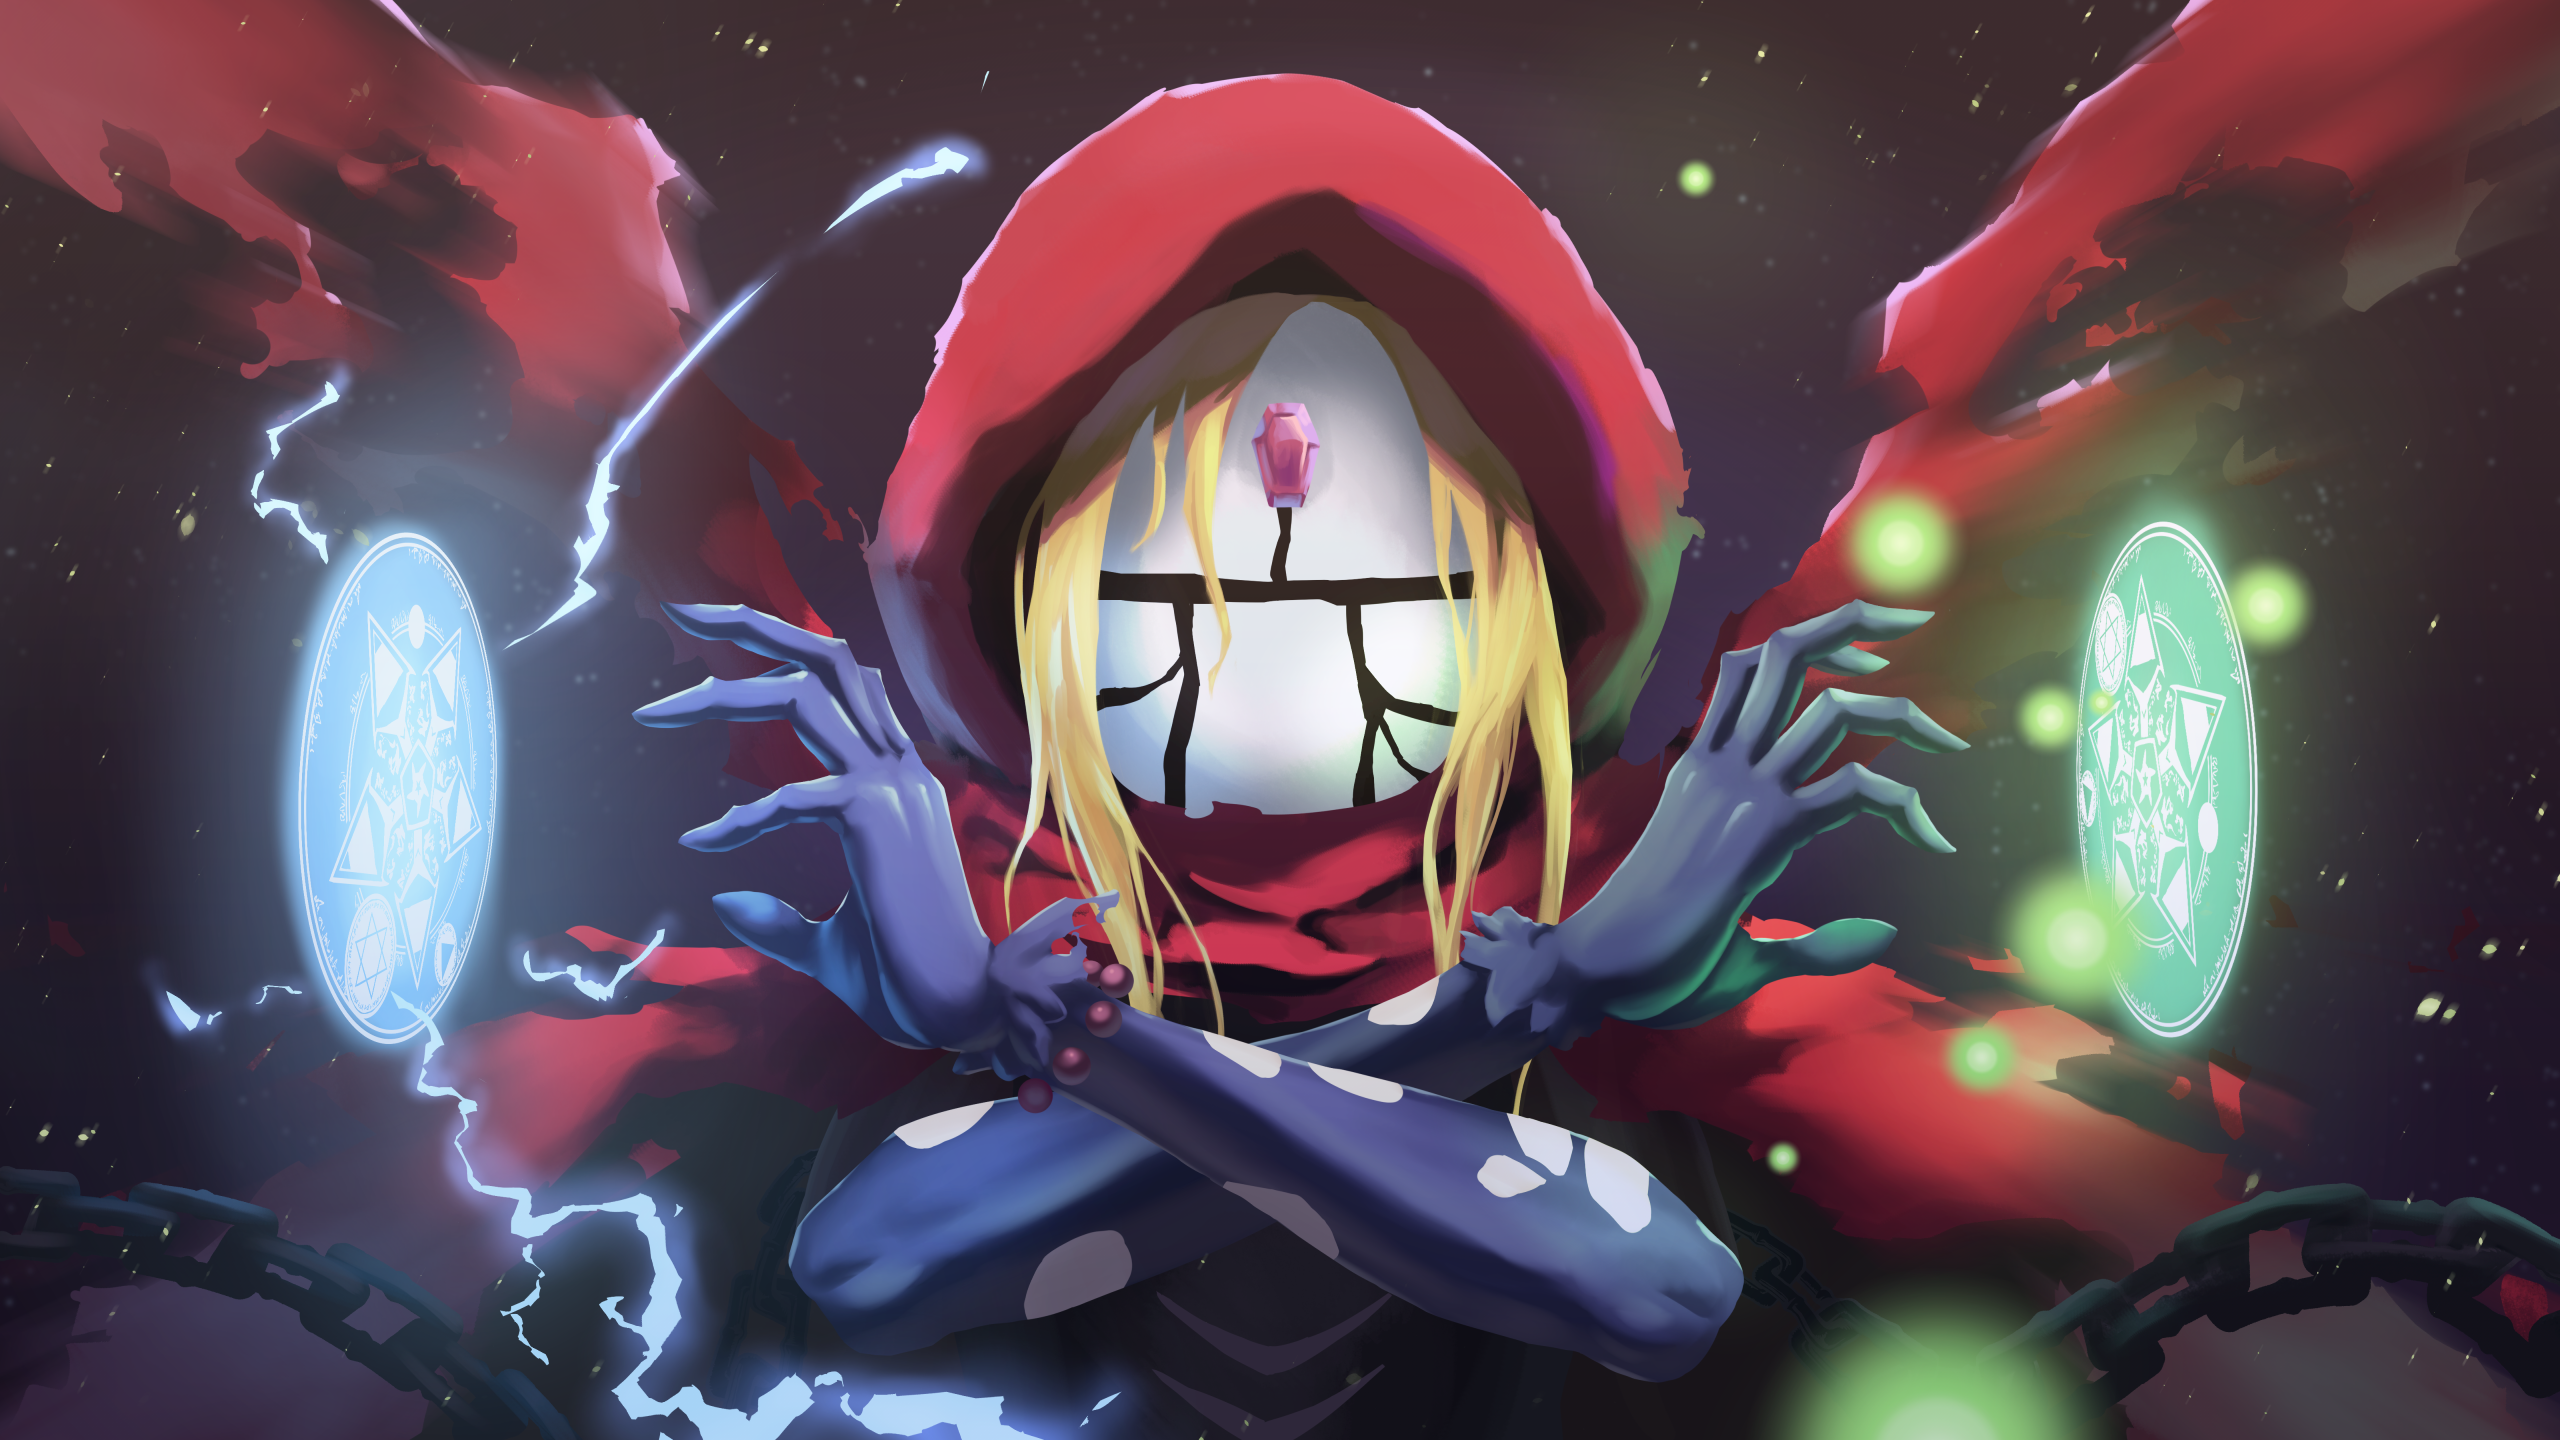 Anime Digital Art Fan Art Overlord Anime Evileye Overlord Magic Wizard Anime Girls 2560x1440